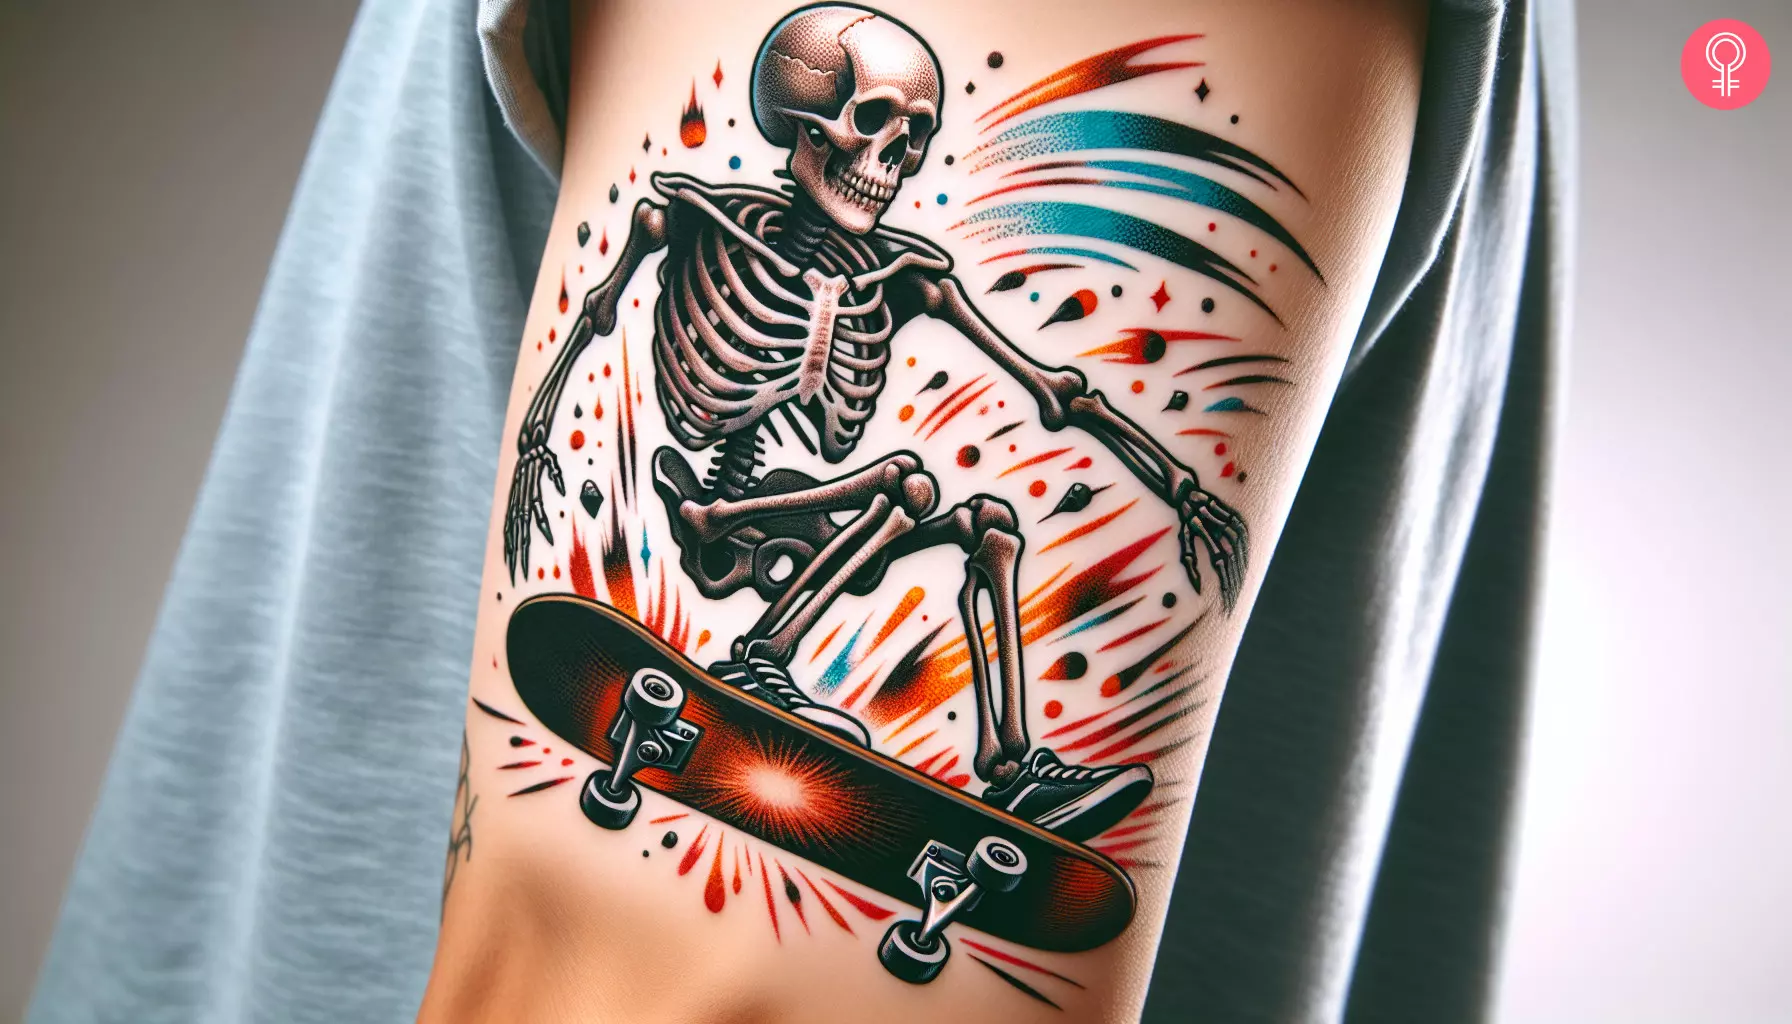 A skeleton skateboarding tattoo on the arm